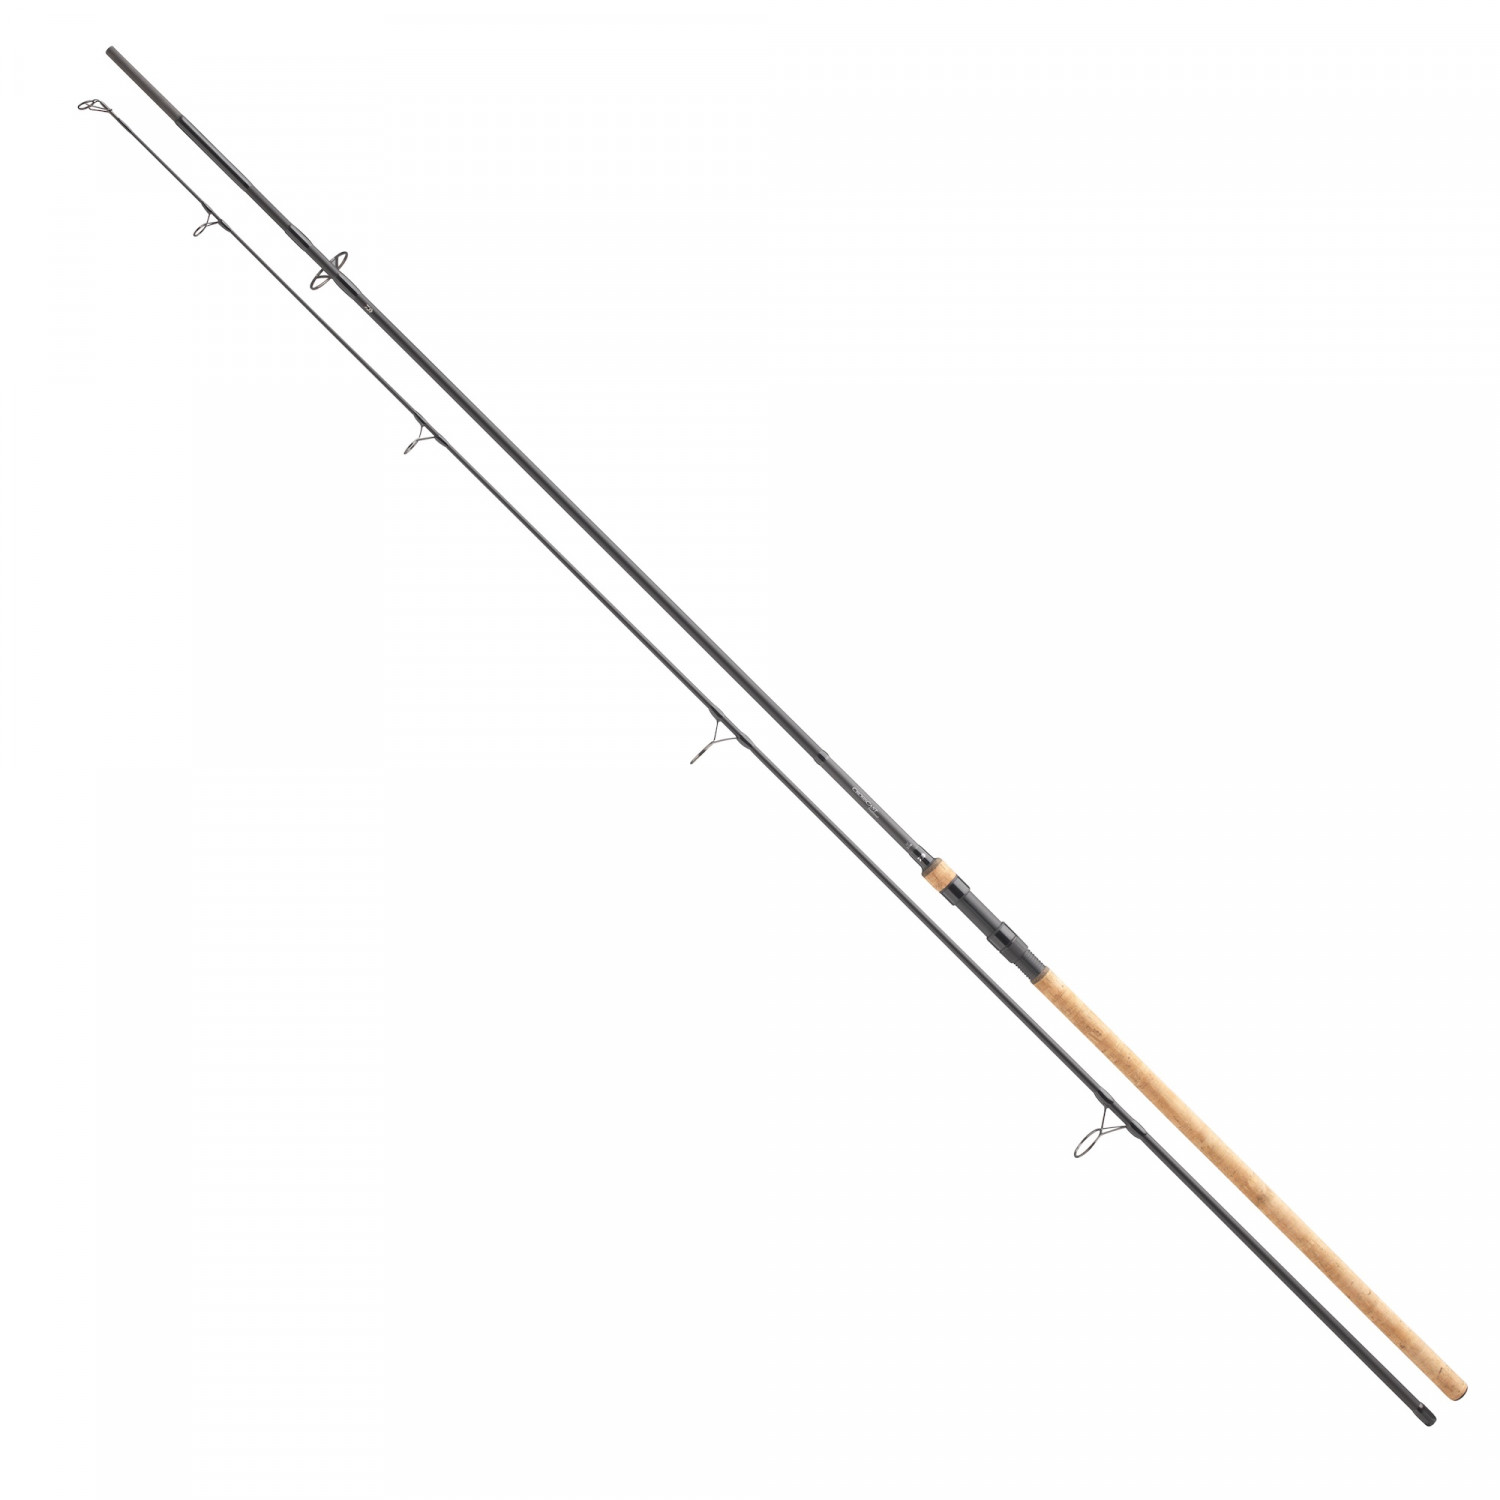 DAIWA Crosscast Traditional Carp Fishing Rod 11912 360 00